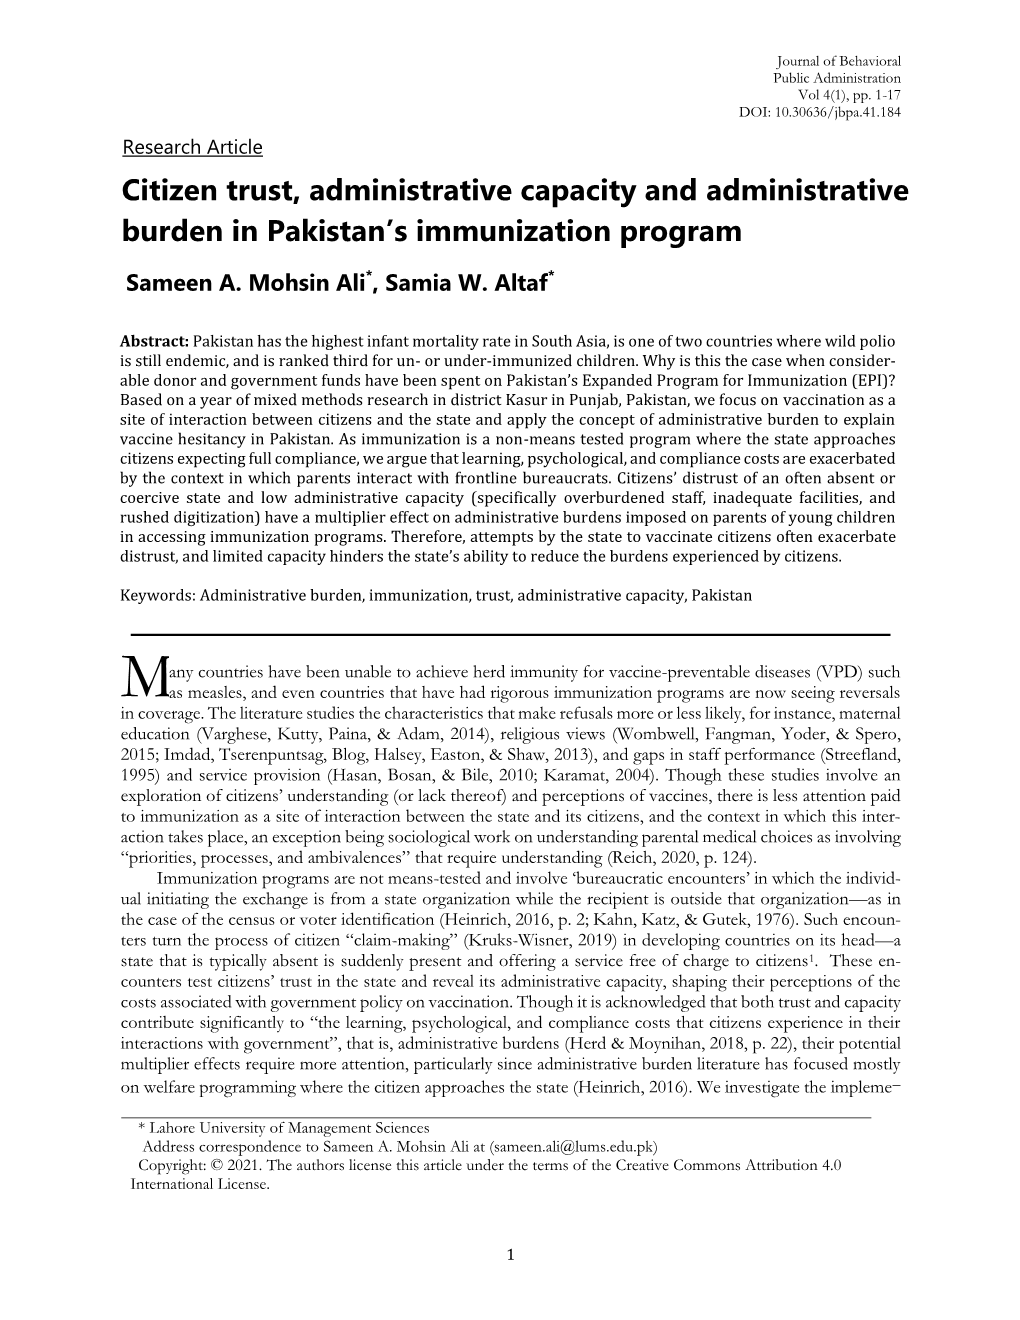 Citizen Trust, Administrative Capacity and Administrative Burden in Pakistan’S Immunization Program